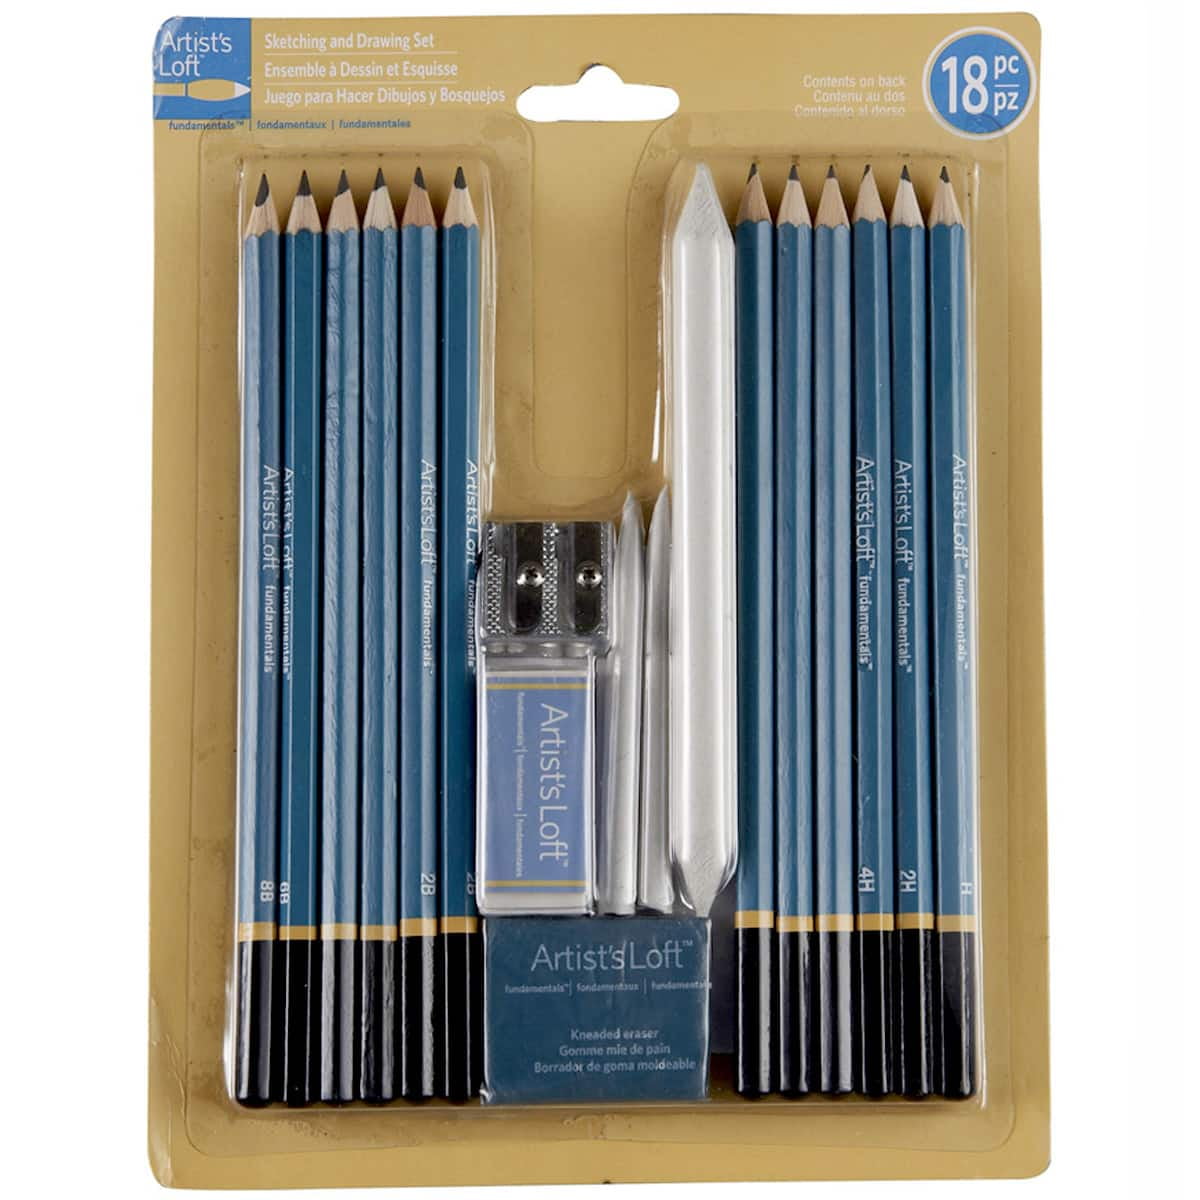  Handyman Crafts 50pcs Sketching Drawing Pencils Set